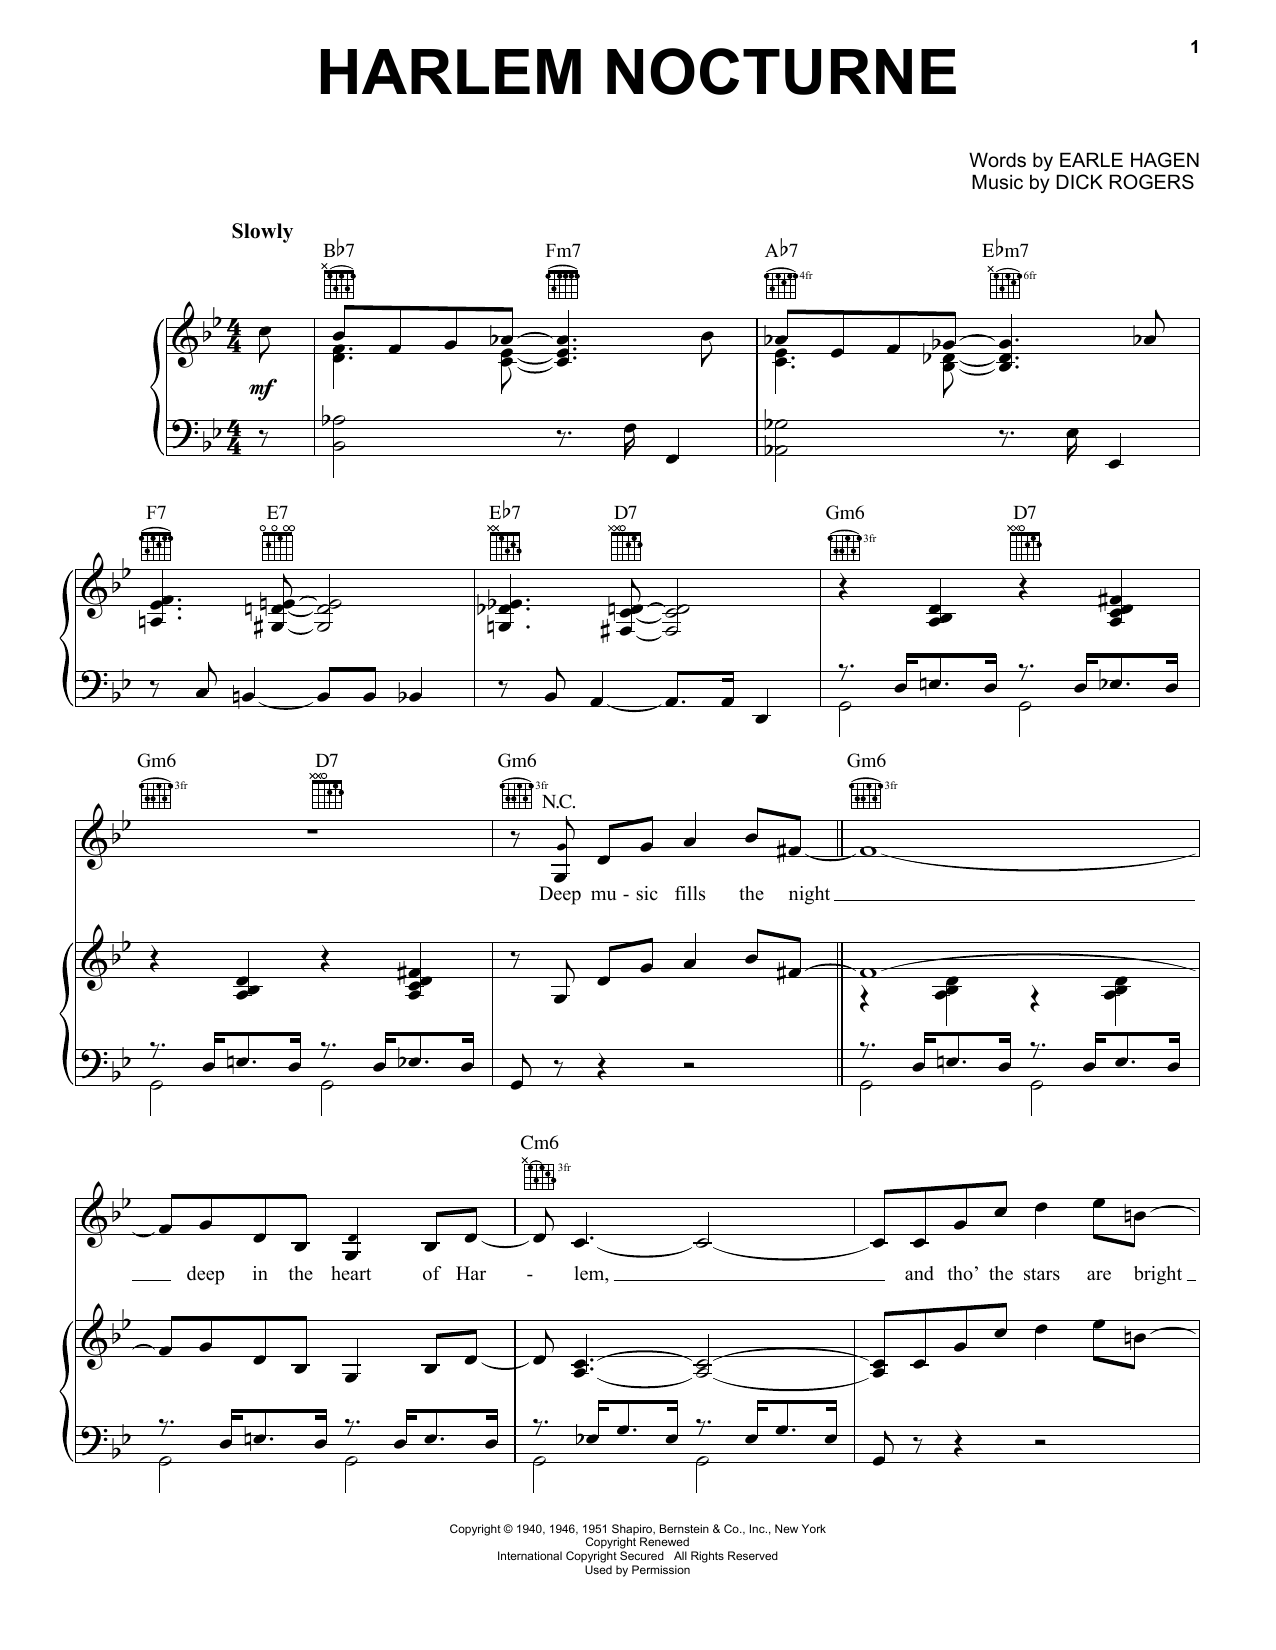 Dick Rogers Harlem Nocturne sheet music notes printable PDF score